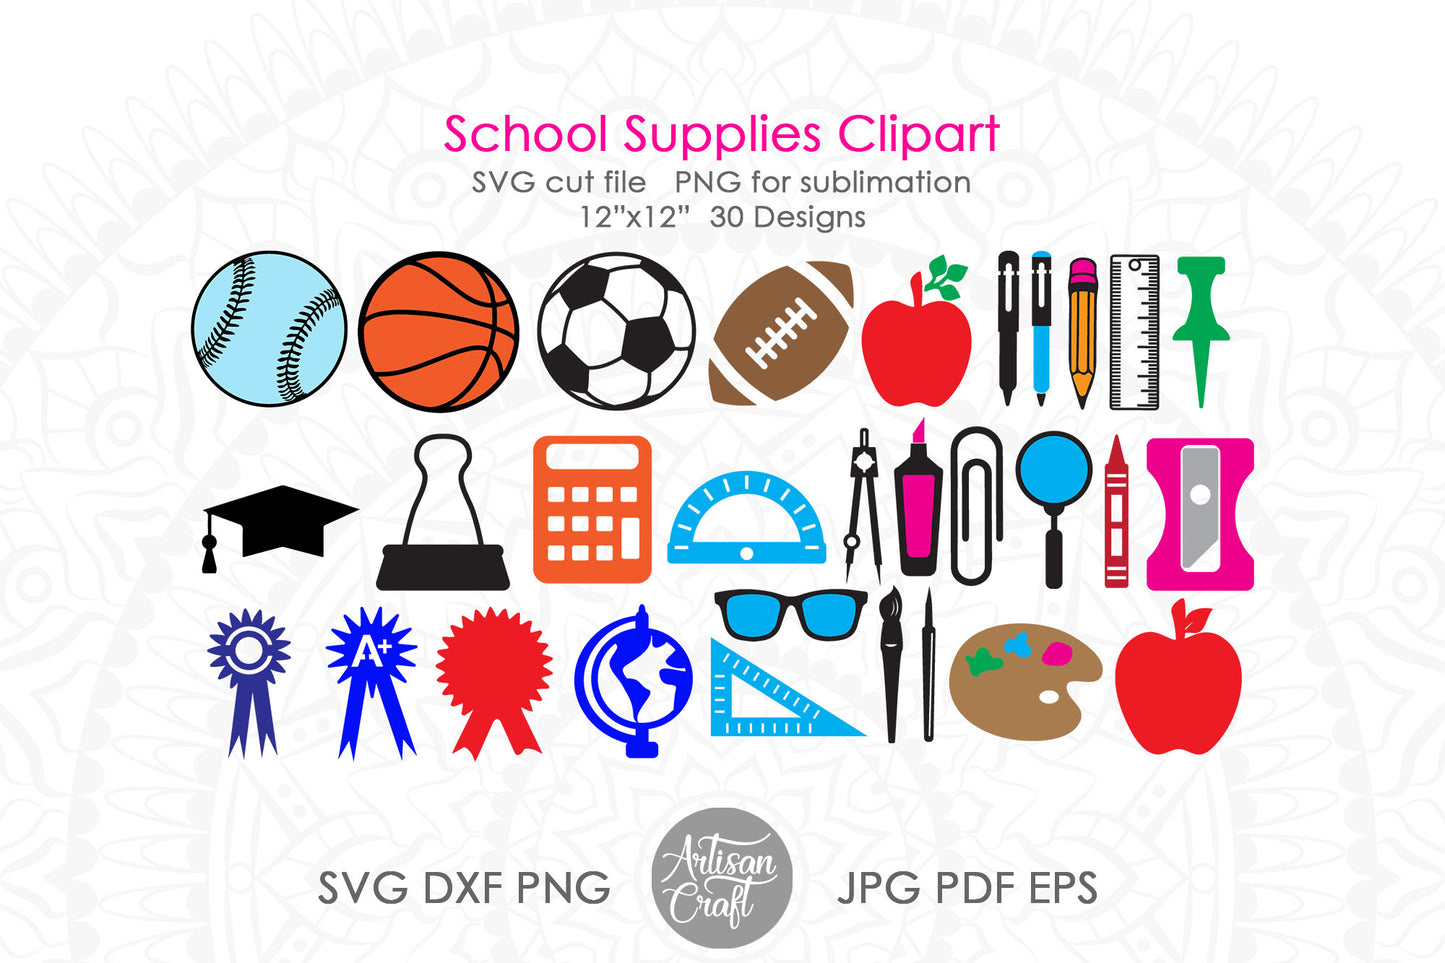 School supplies clipart, SVG cut files